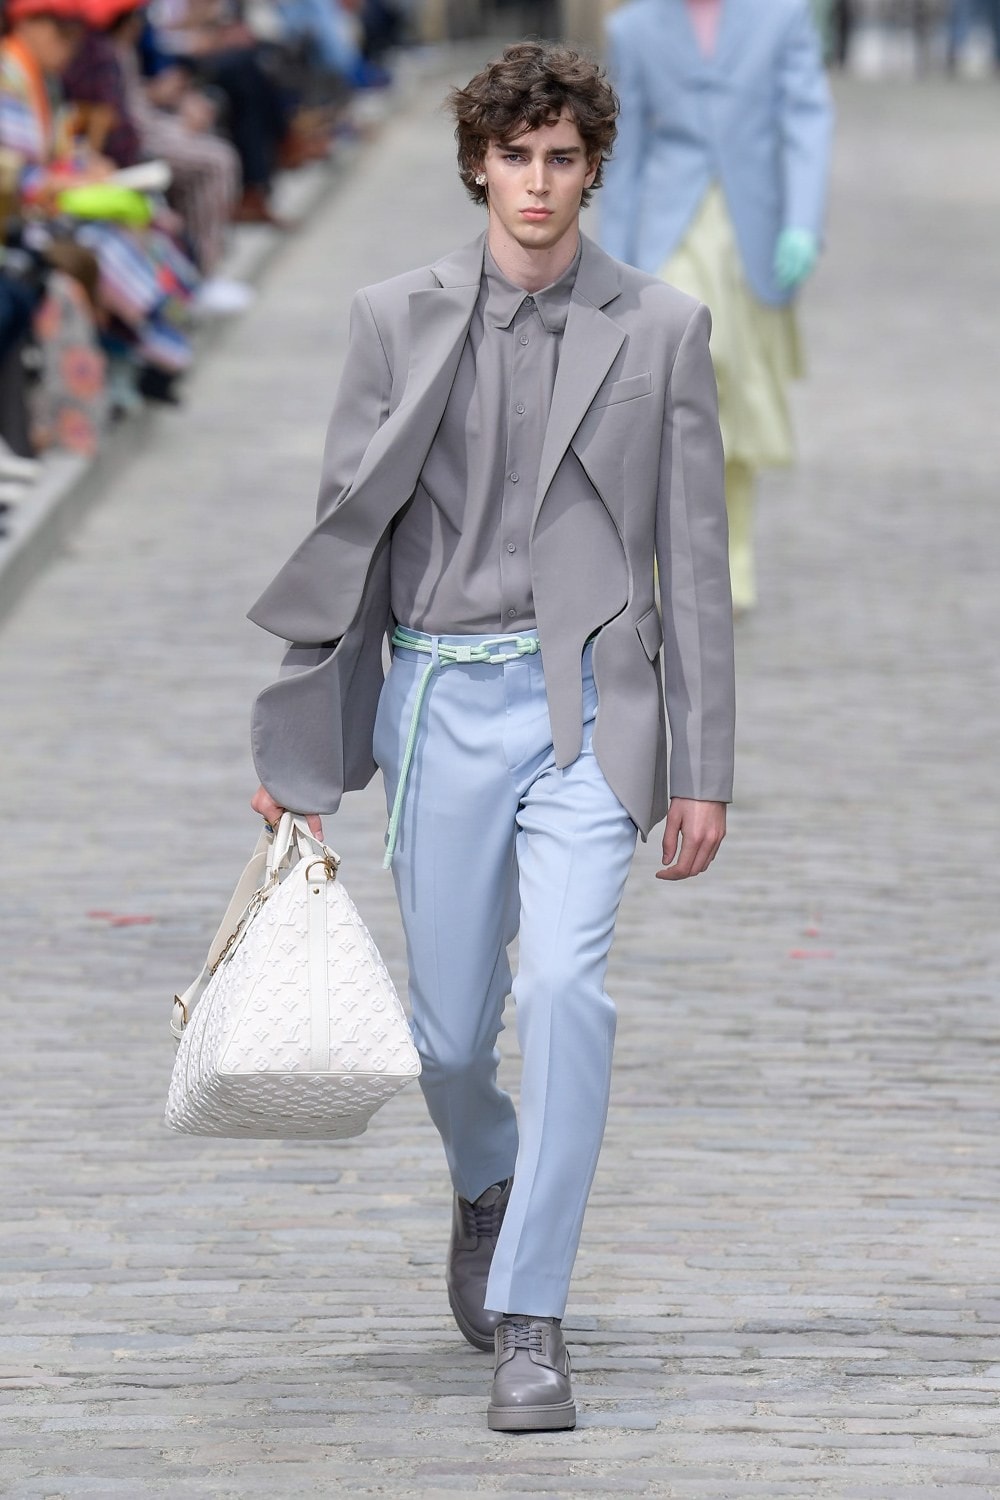 Louis Vuitton Virgil Abloh Spring Summer 2020 Paris Fashion Week Men's Show Collection Blazer Grey Pants Blue